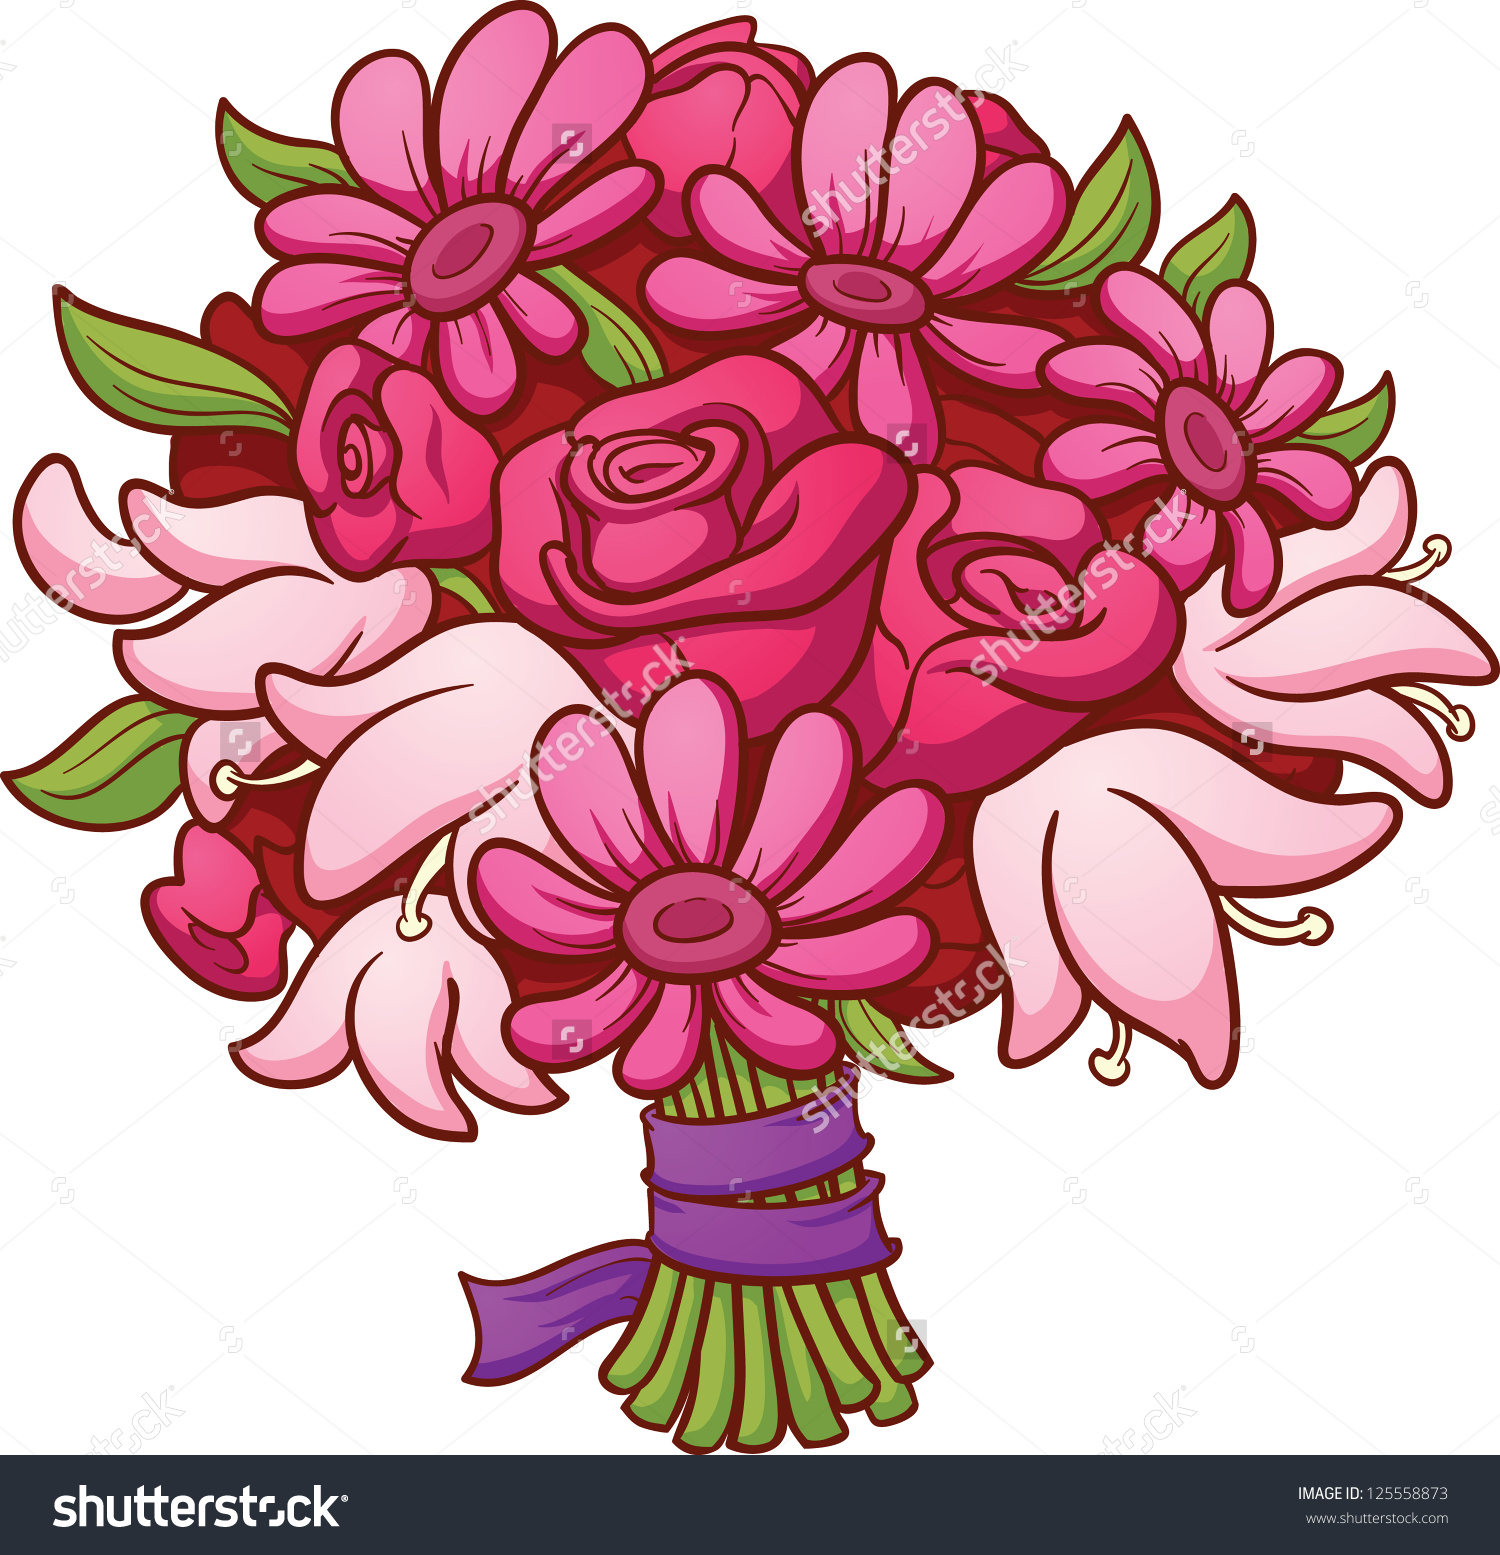 free clip art of flower bouquet - photo #24